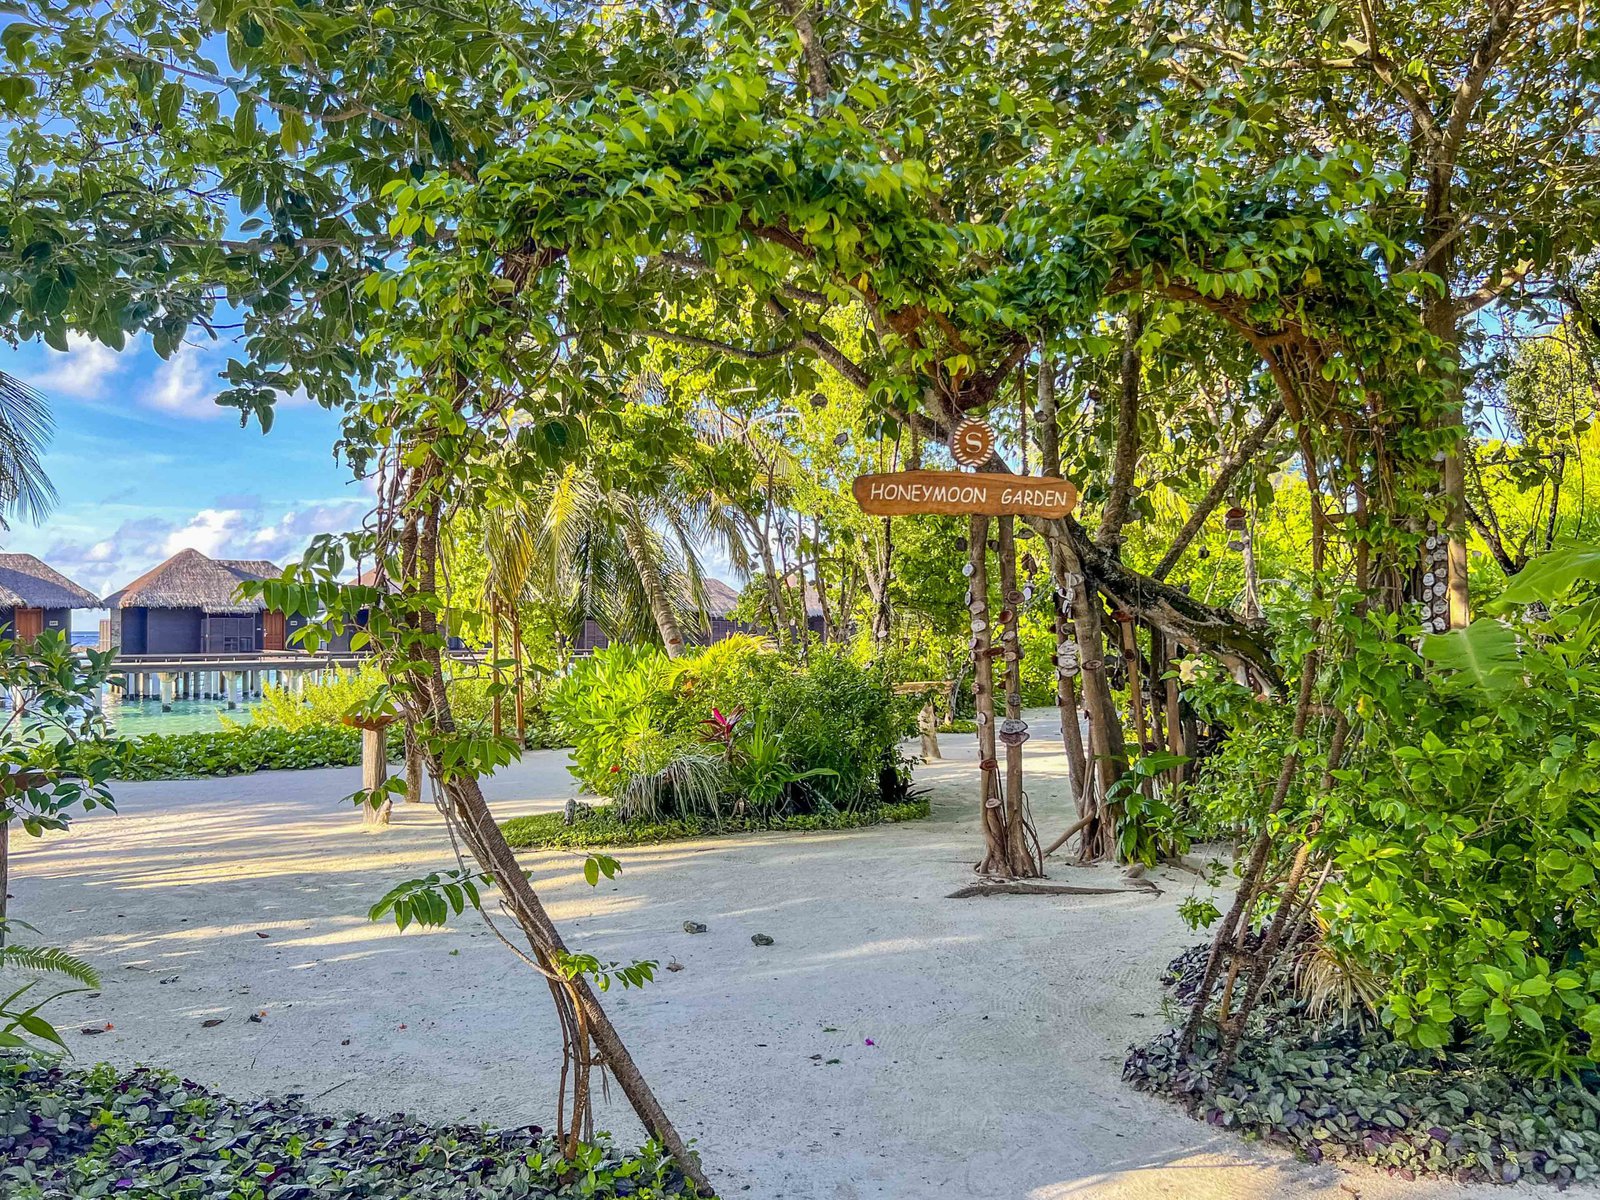 Sheraton Maldives Gardens 6426